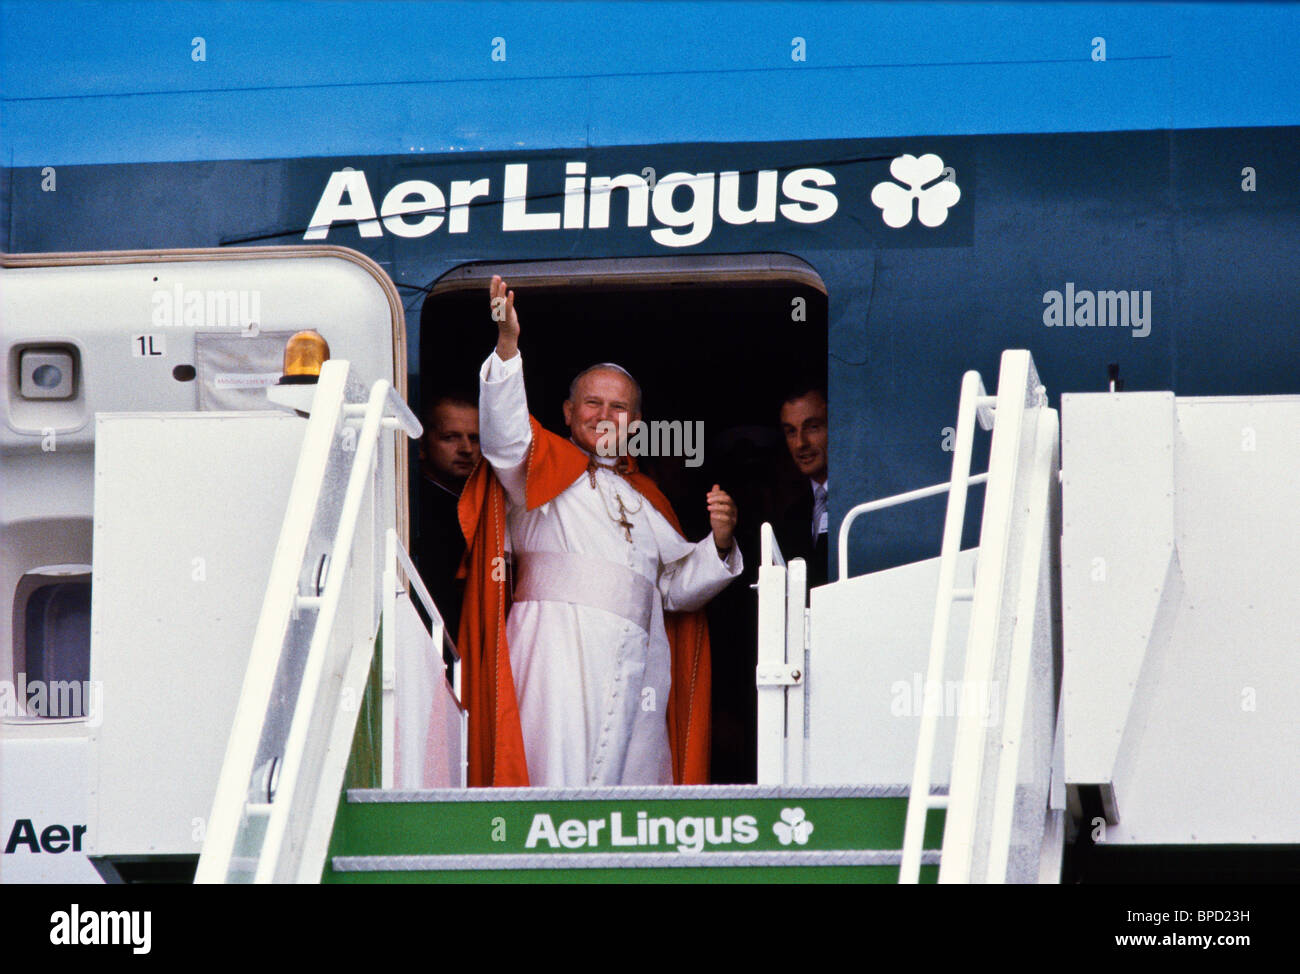 aer lingus flight arrivals